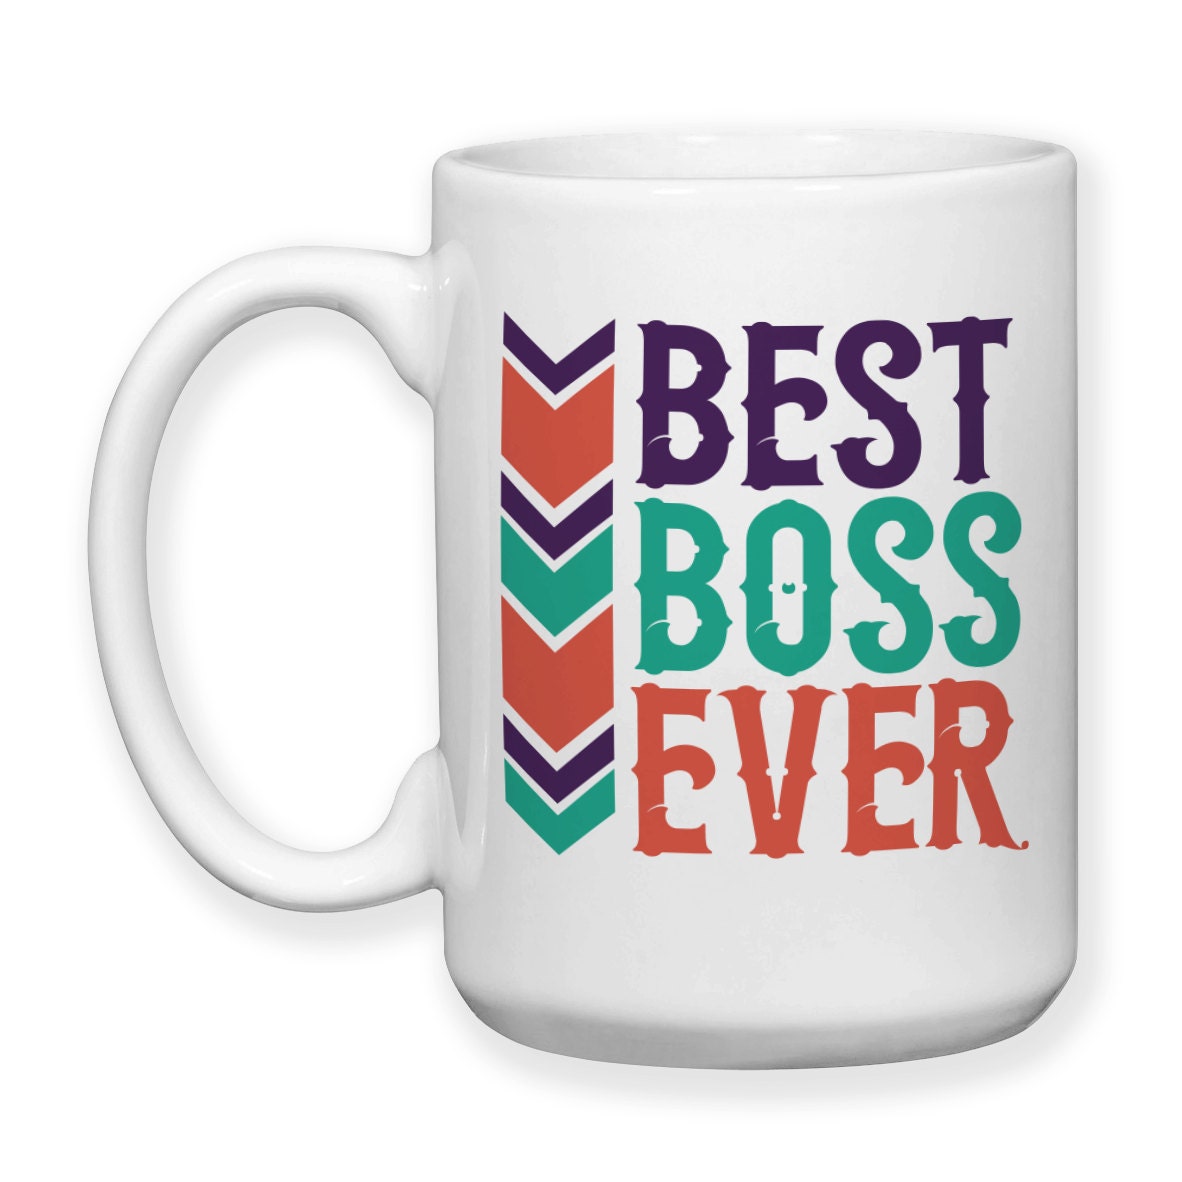 Coffee Mug Best Boss Ever 002 Boss Gift Boss by GroovyGiftables